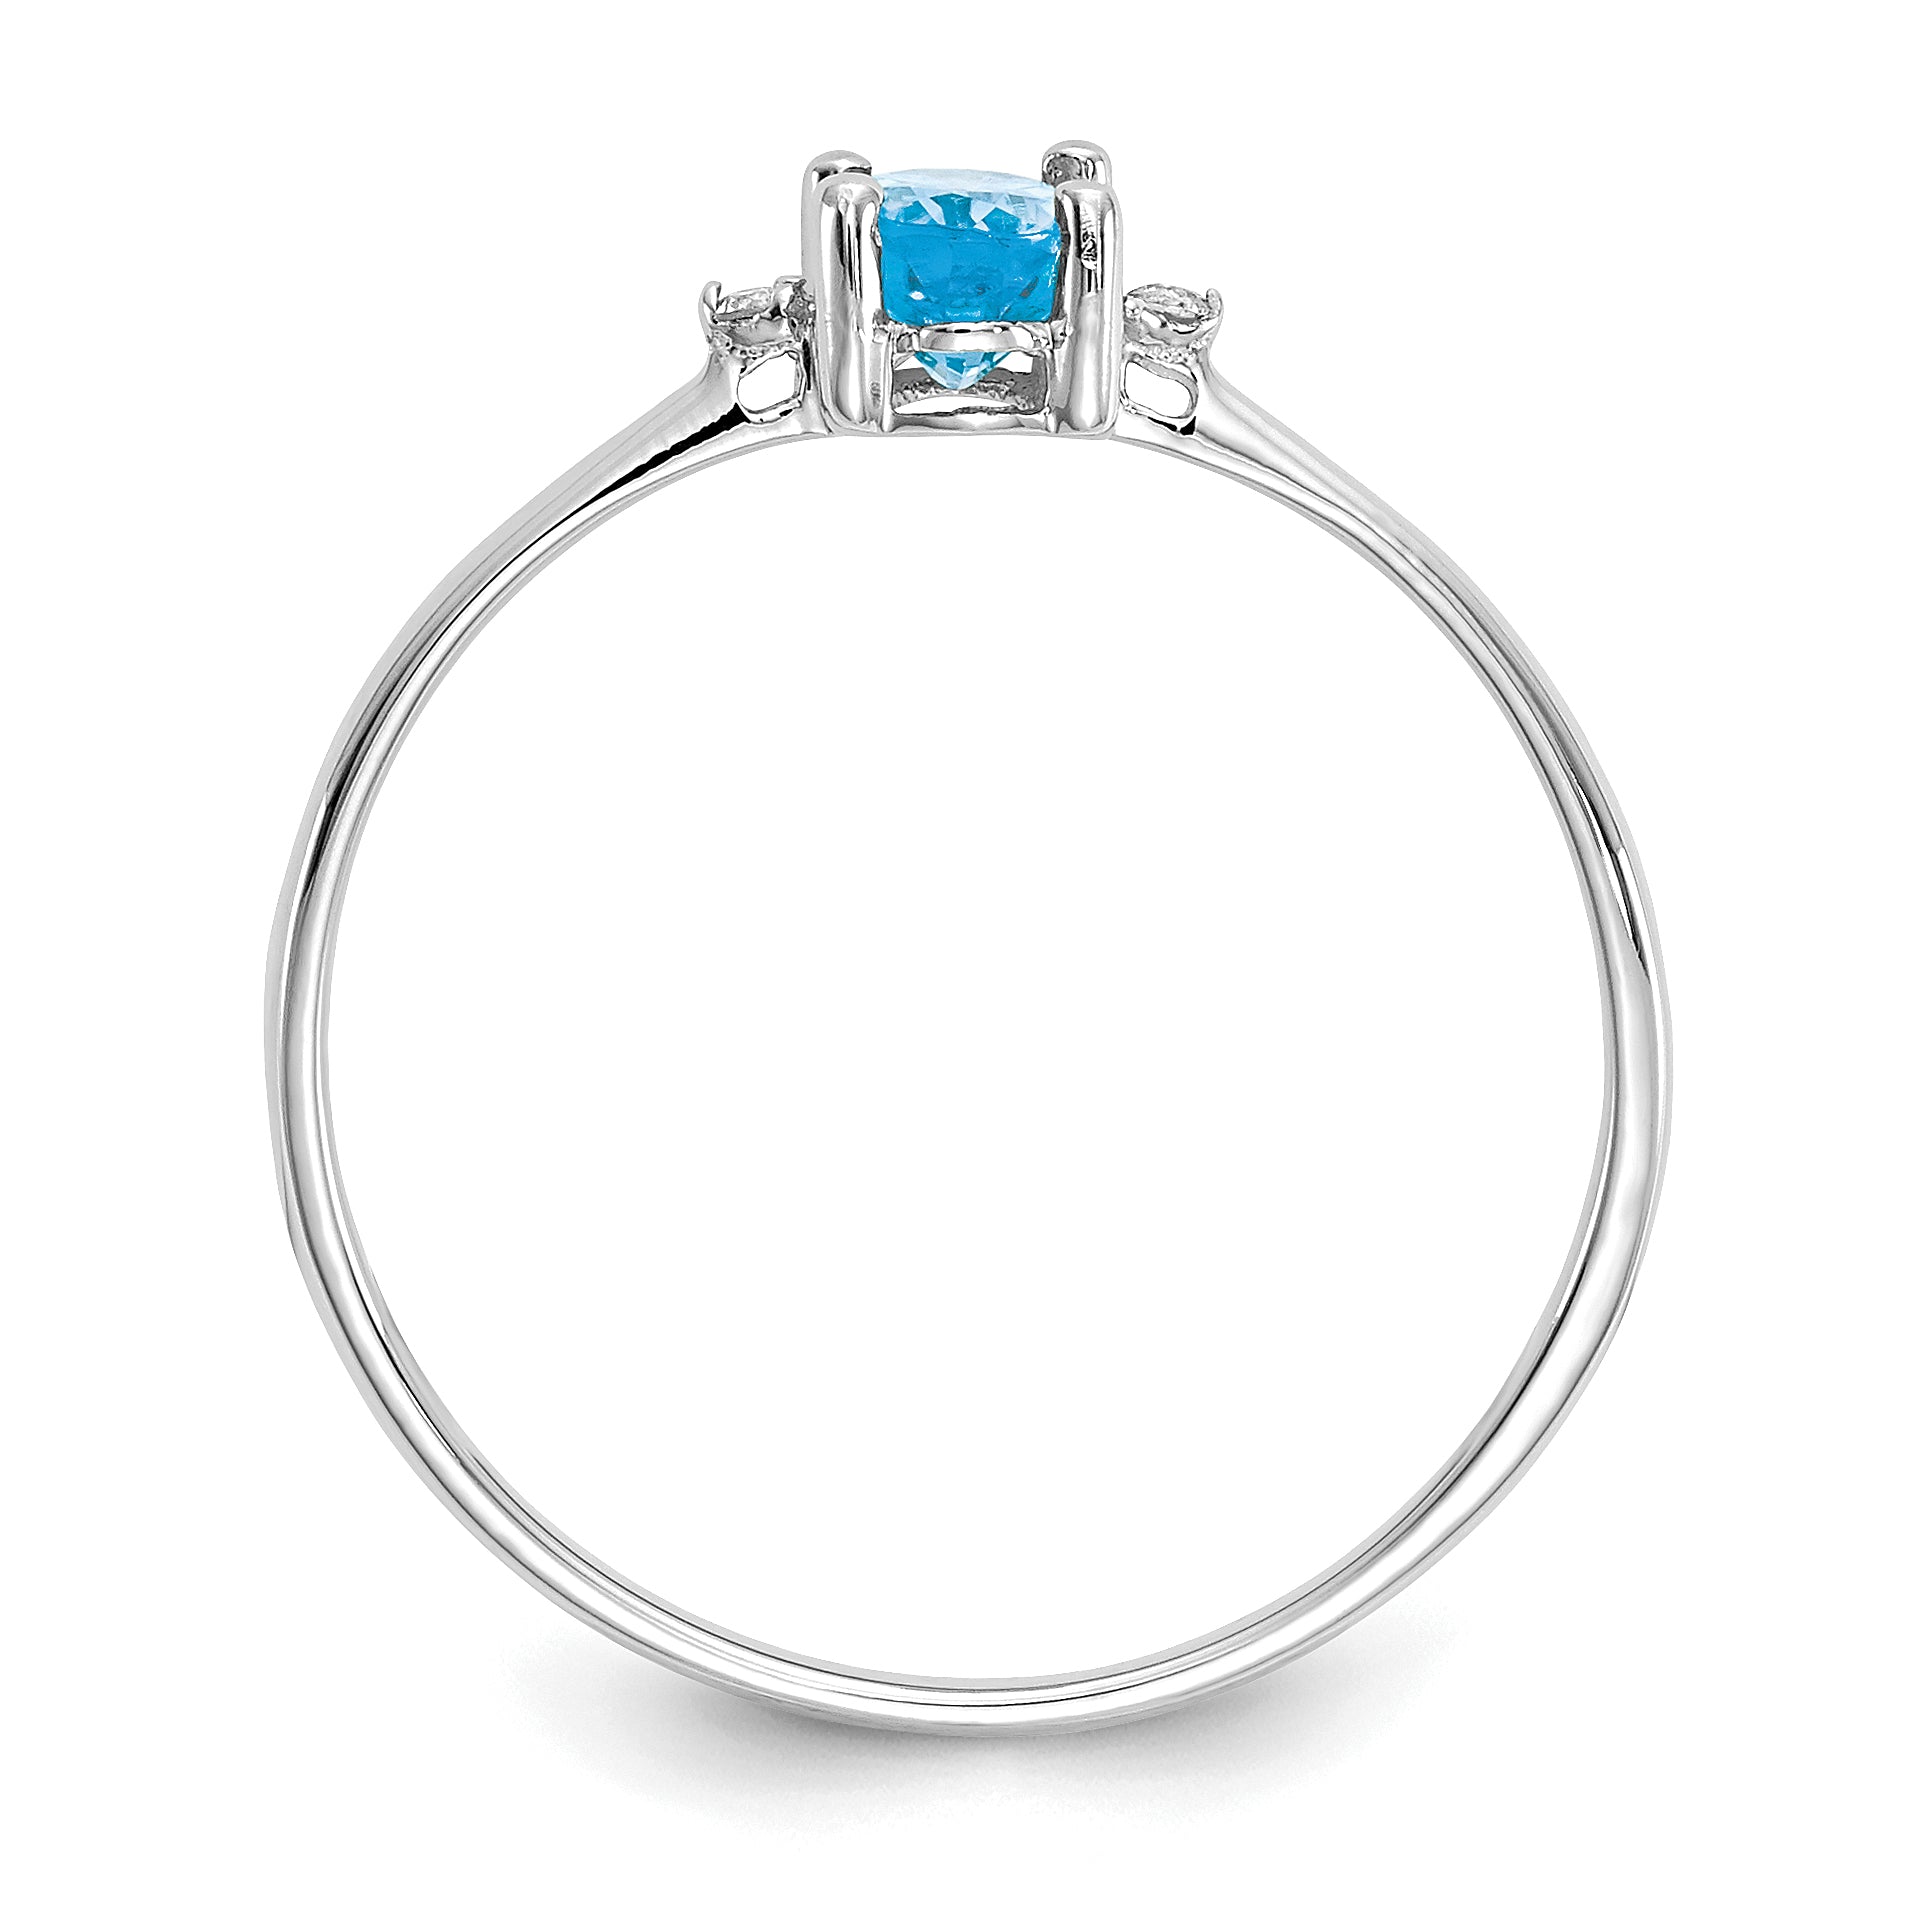 10k White Gold Polished Genuine Diamond/Blue Topaz Birthstone Ring